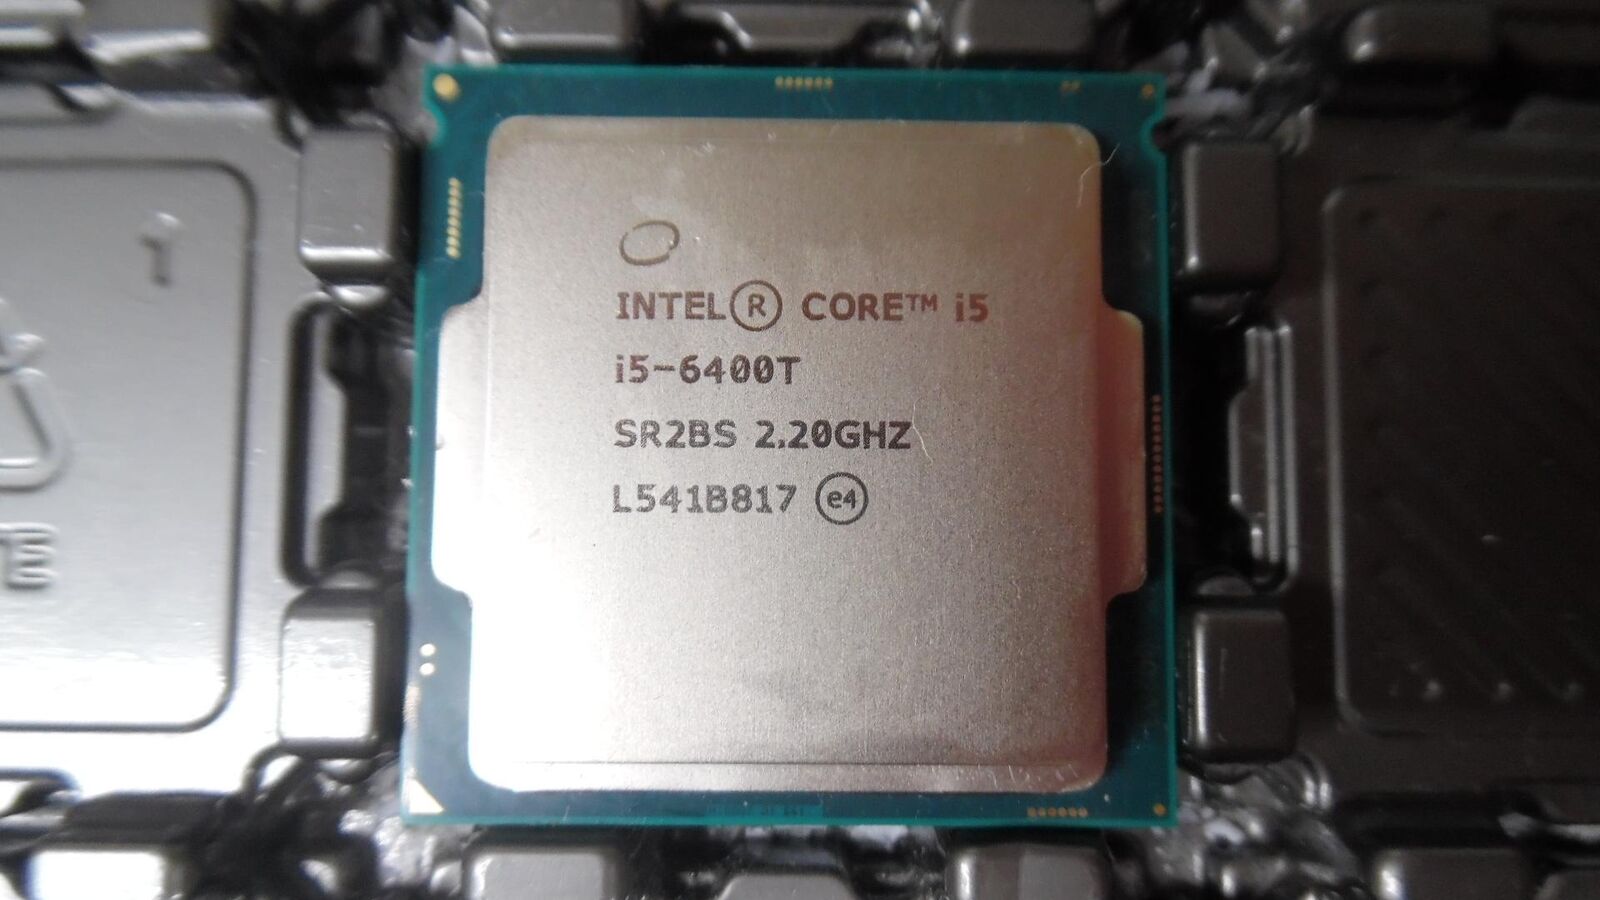 Intel Core i5-6400T - 2.20GHz Quad Core CPU Processor SR2BS